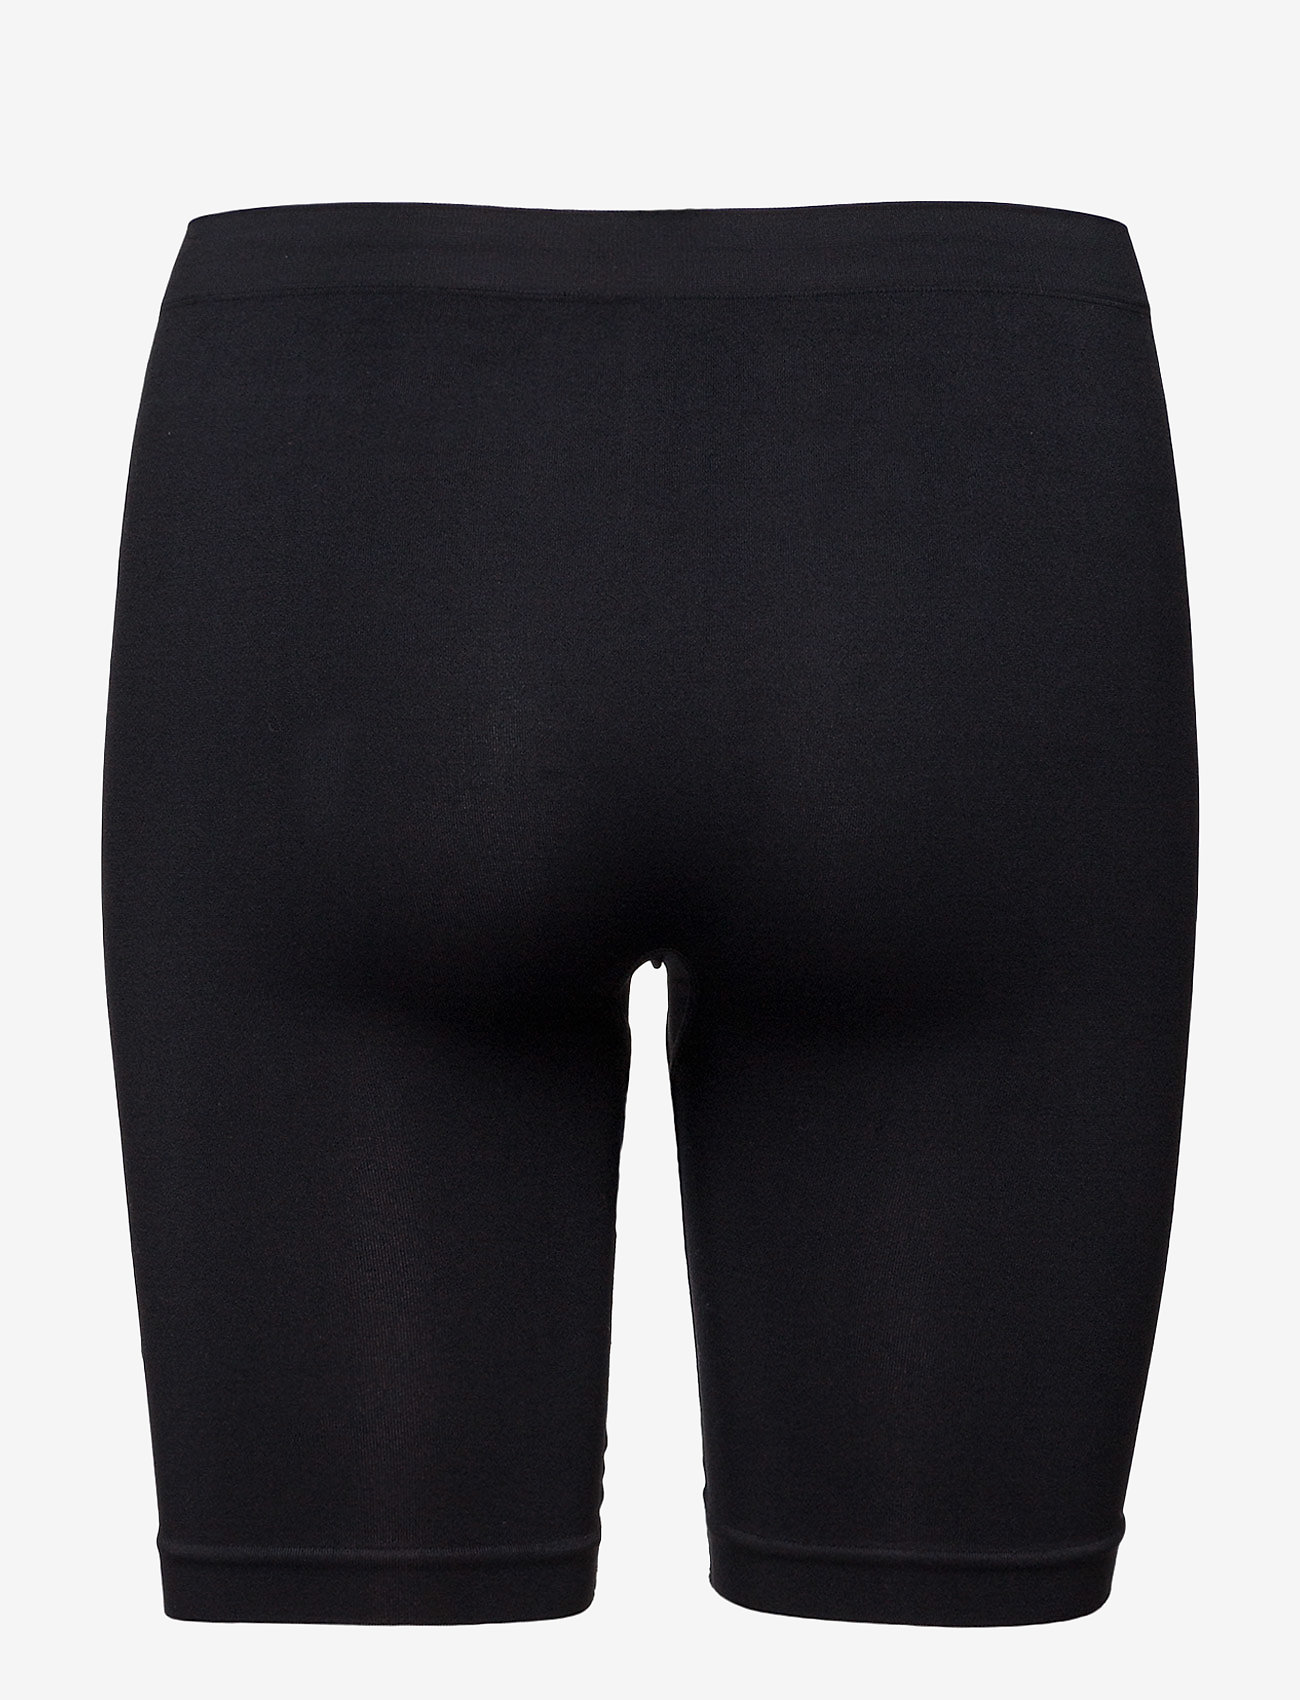 Missya - Lucia long shorts - midi & maxi trusser - black - 1